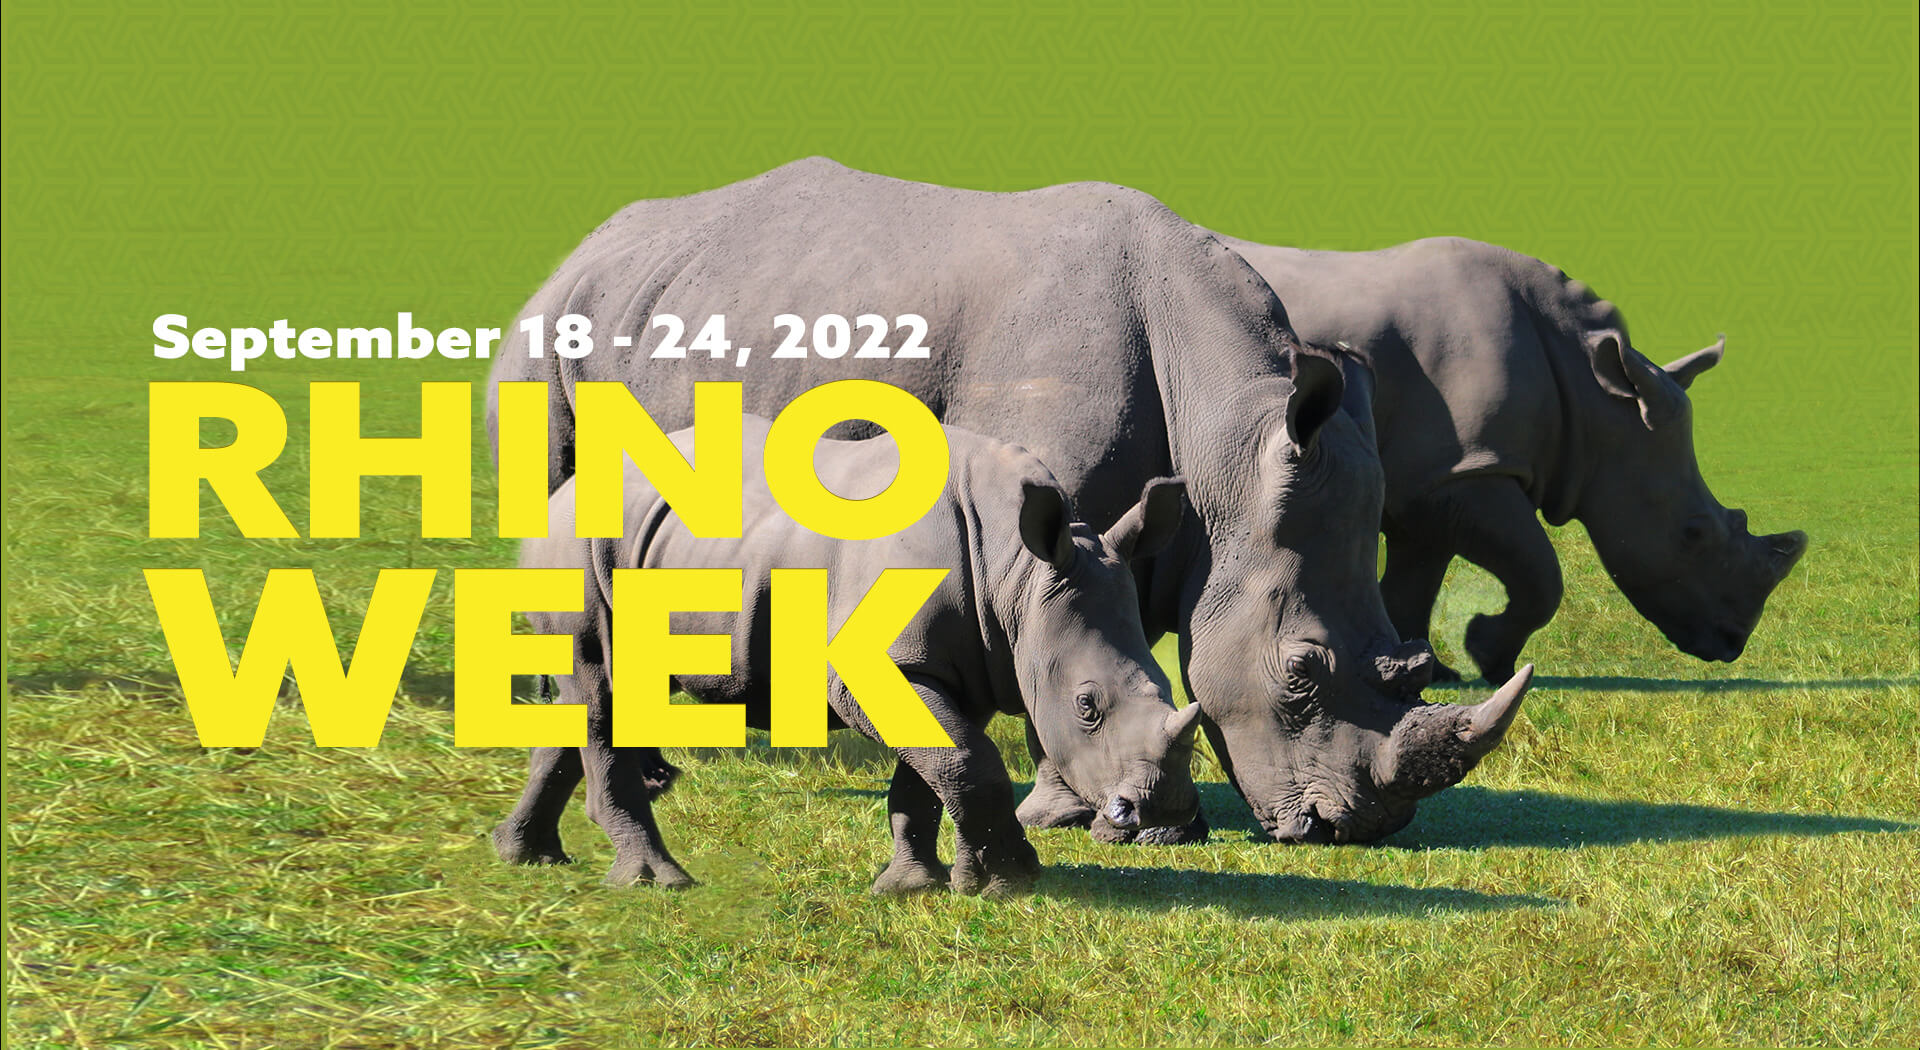 World Rhino Week